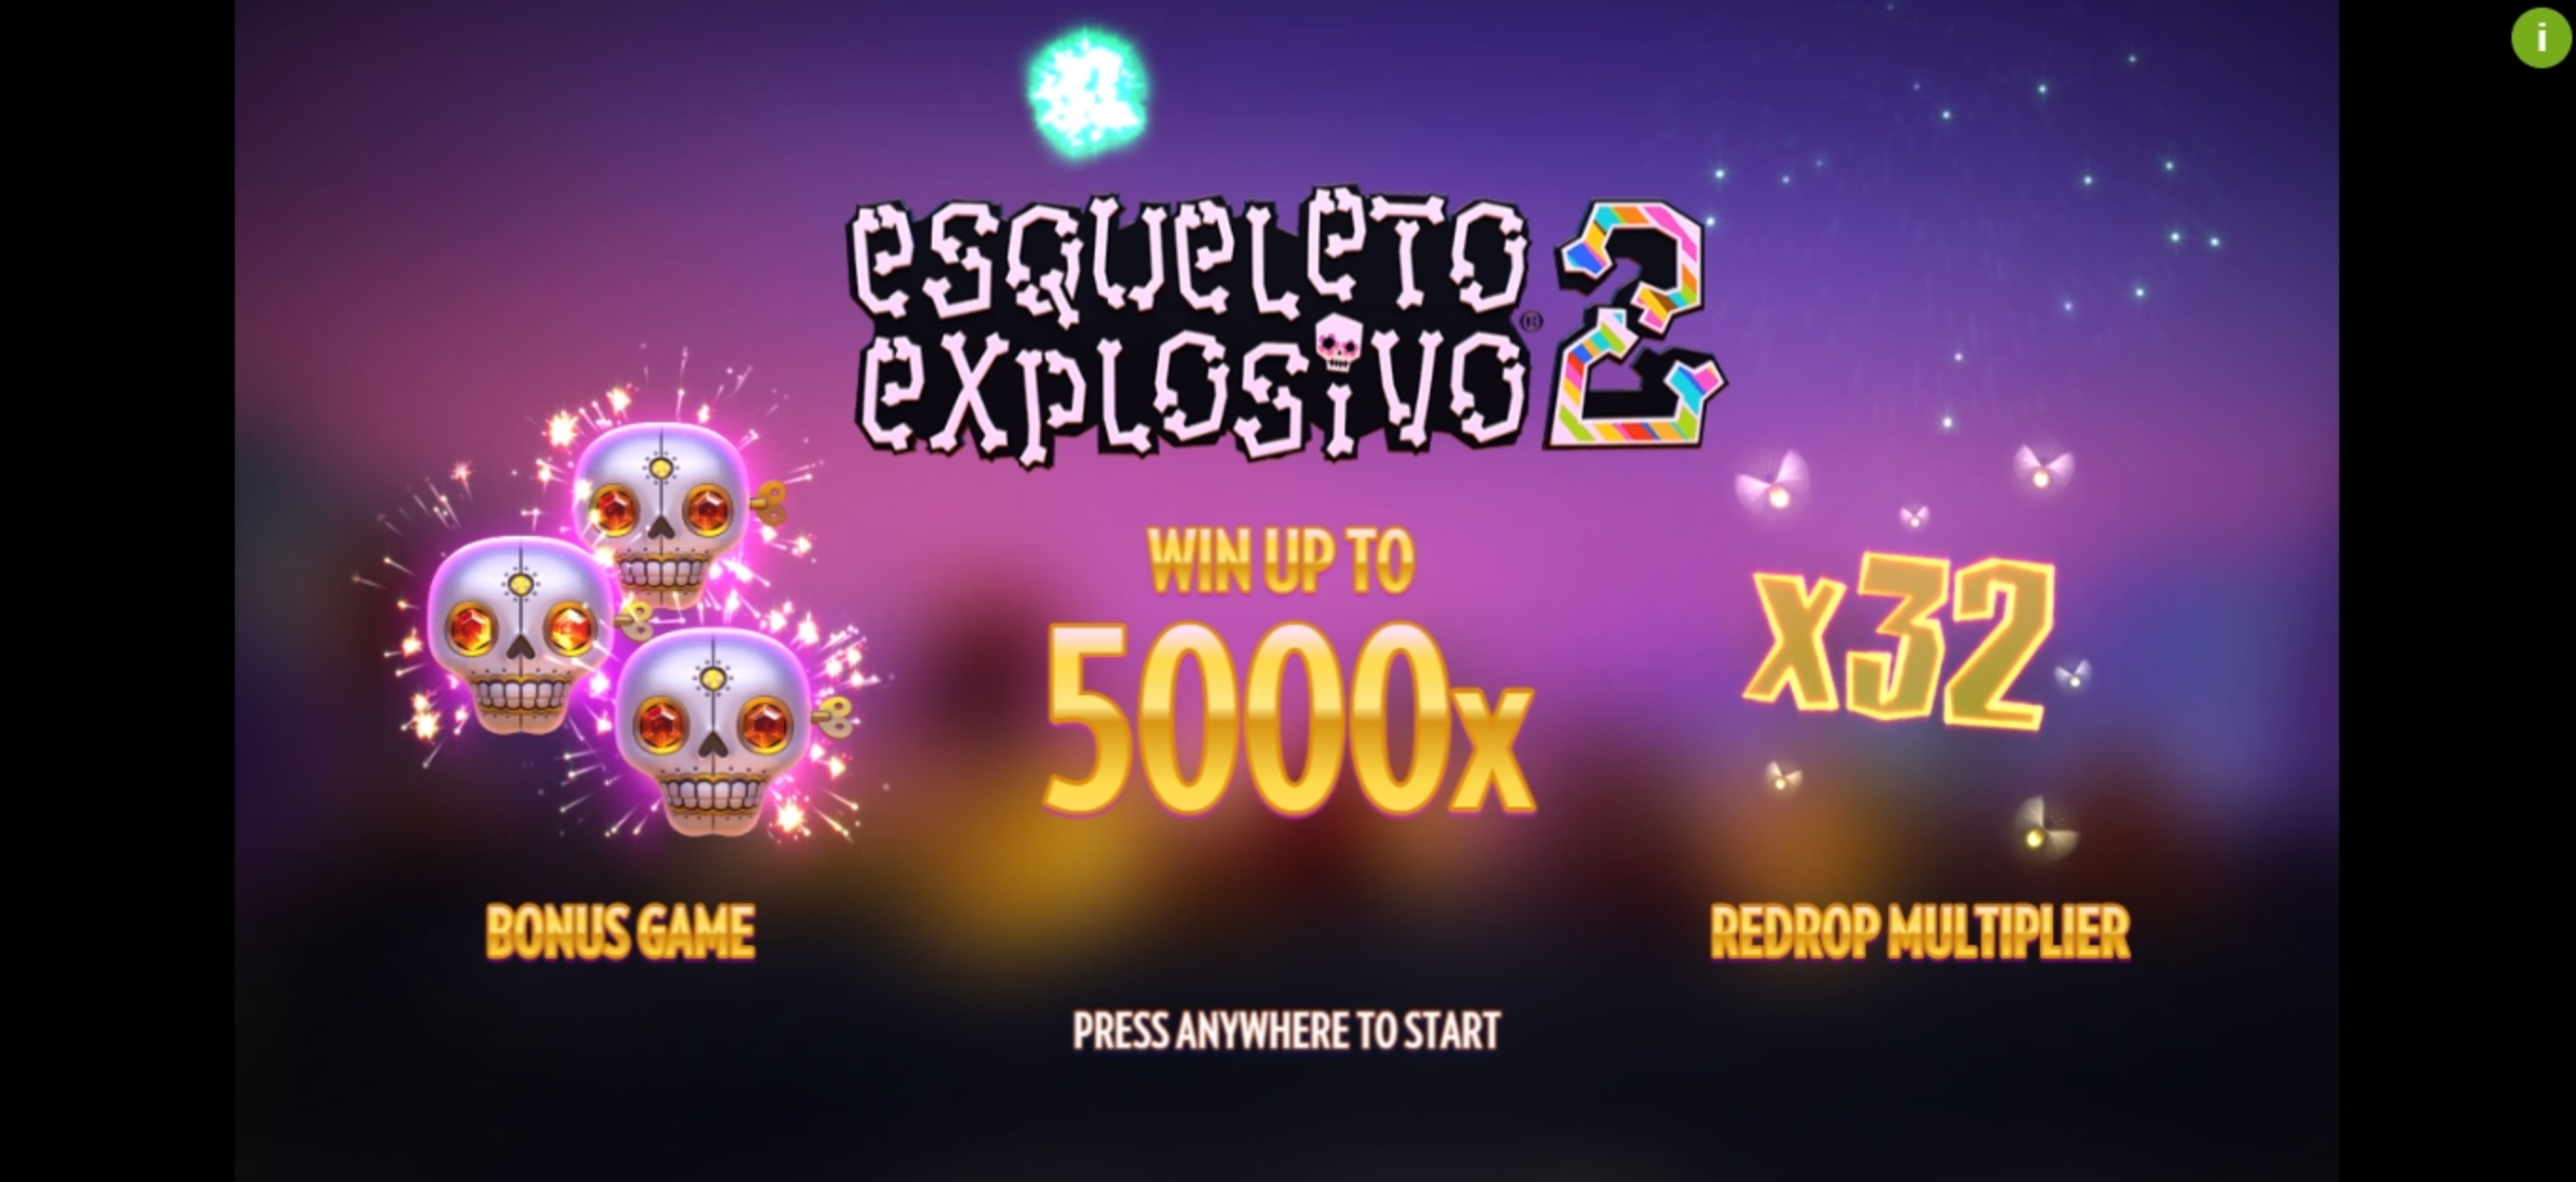 Play Esqueleto Explosivo 2 Free Casino Slot Game by Thunderkick